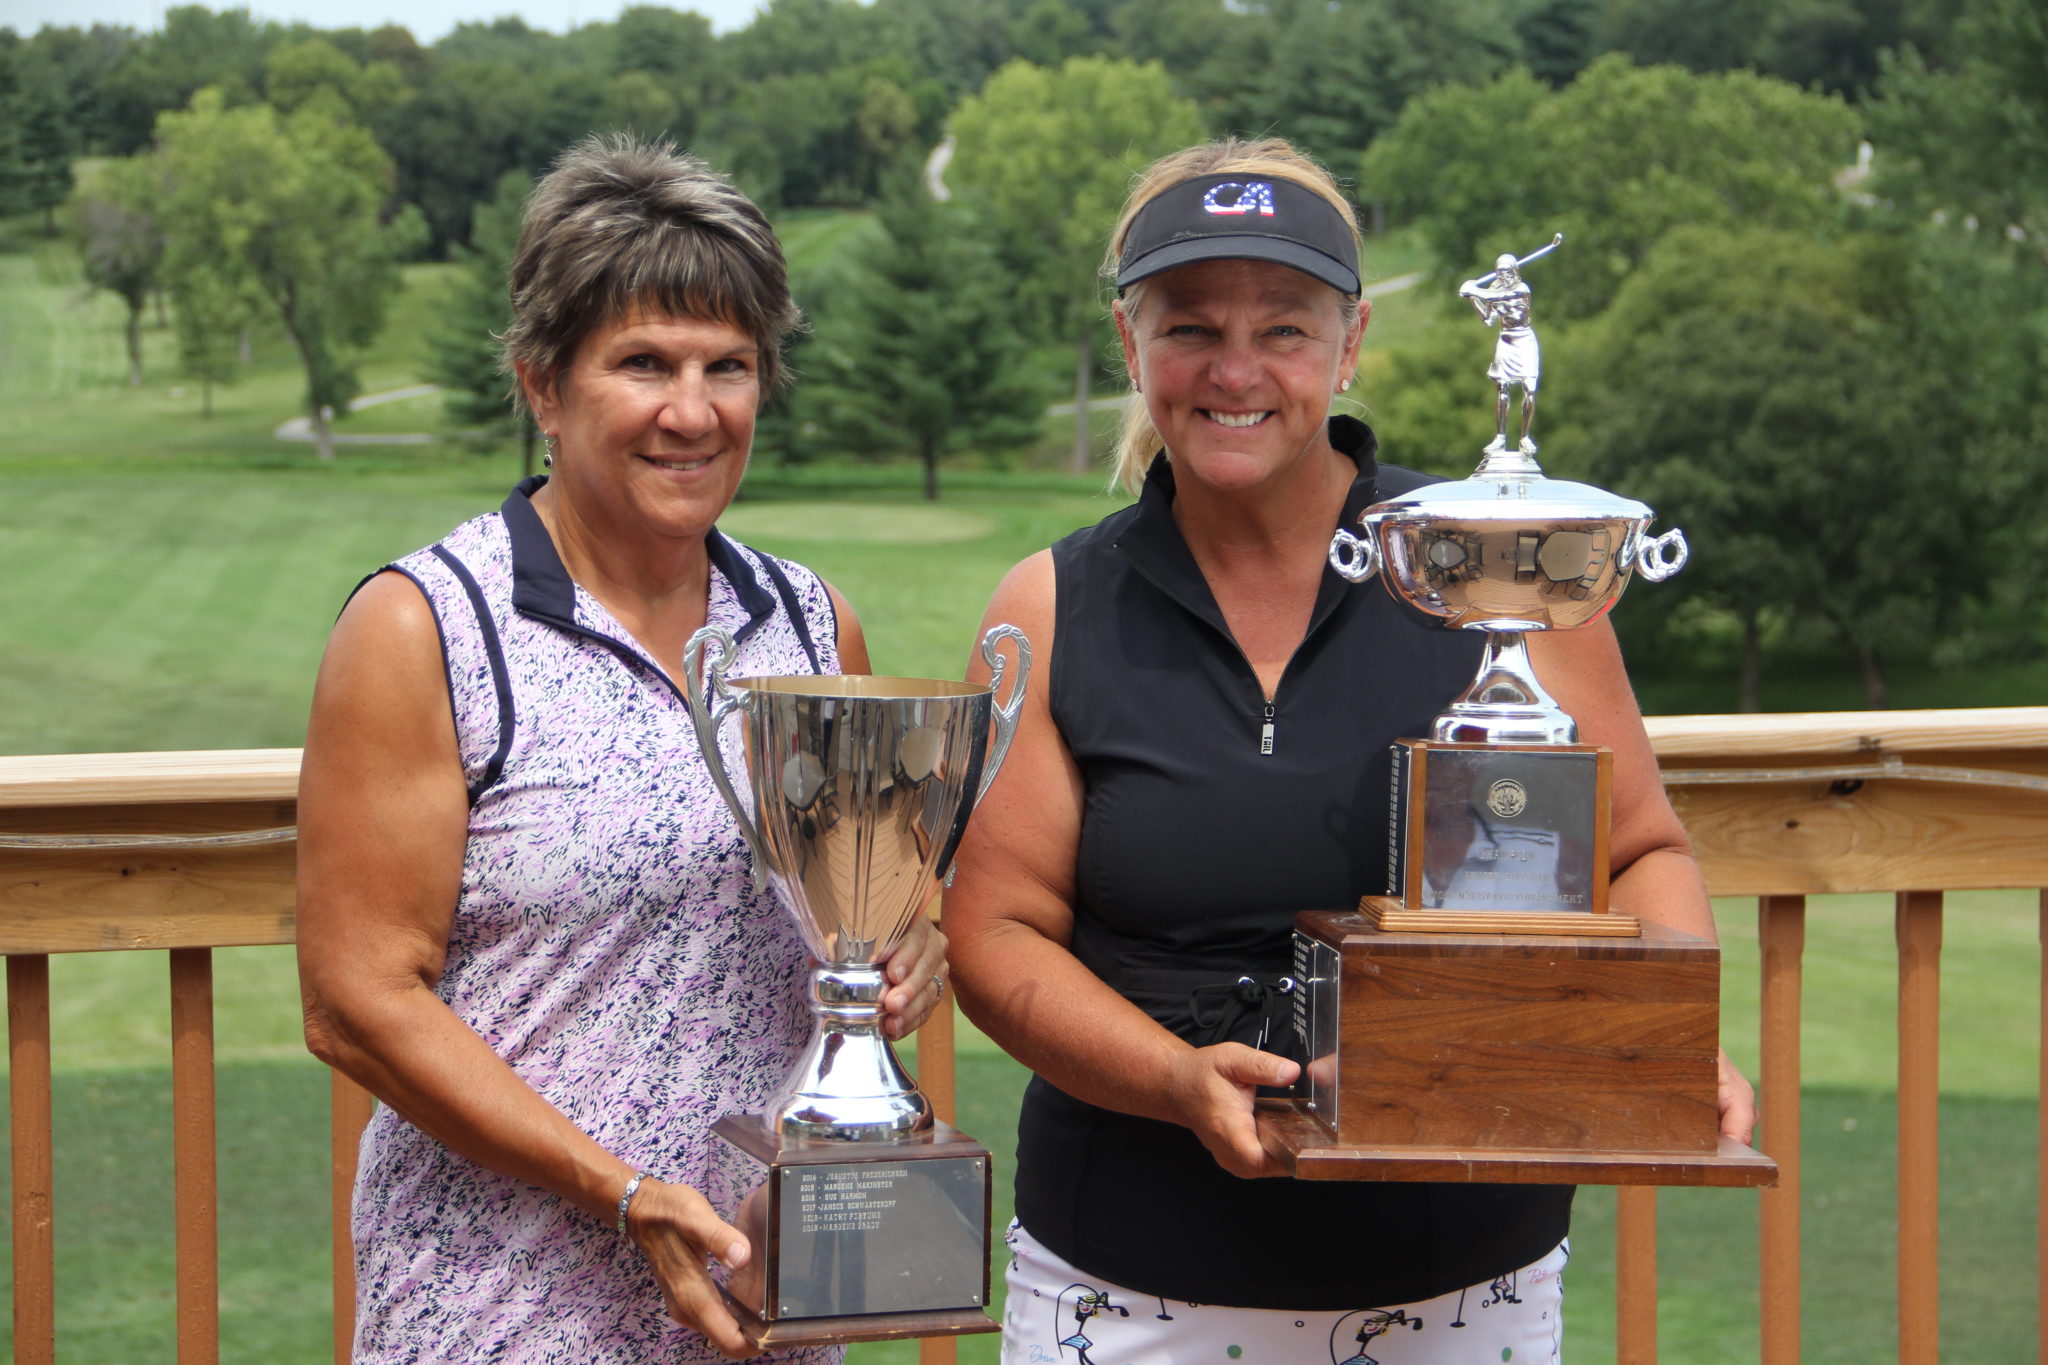 Leszczynski Shoots Final Round 70 Wins 56th Iowa Senior Women S Amateur Iowa Golf Association